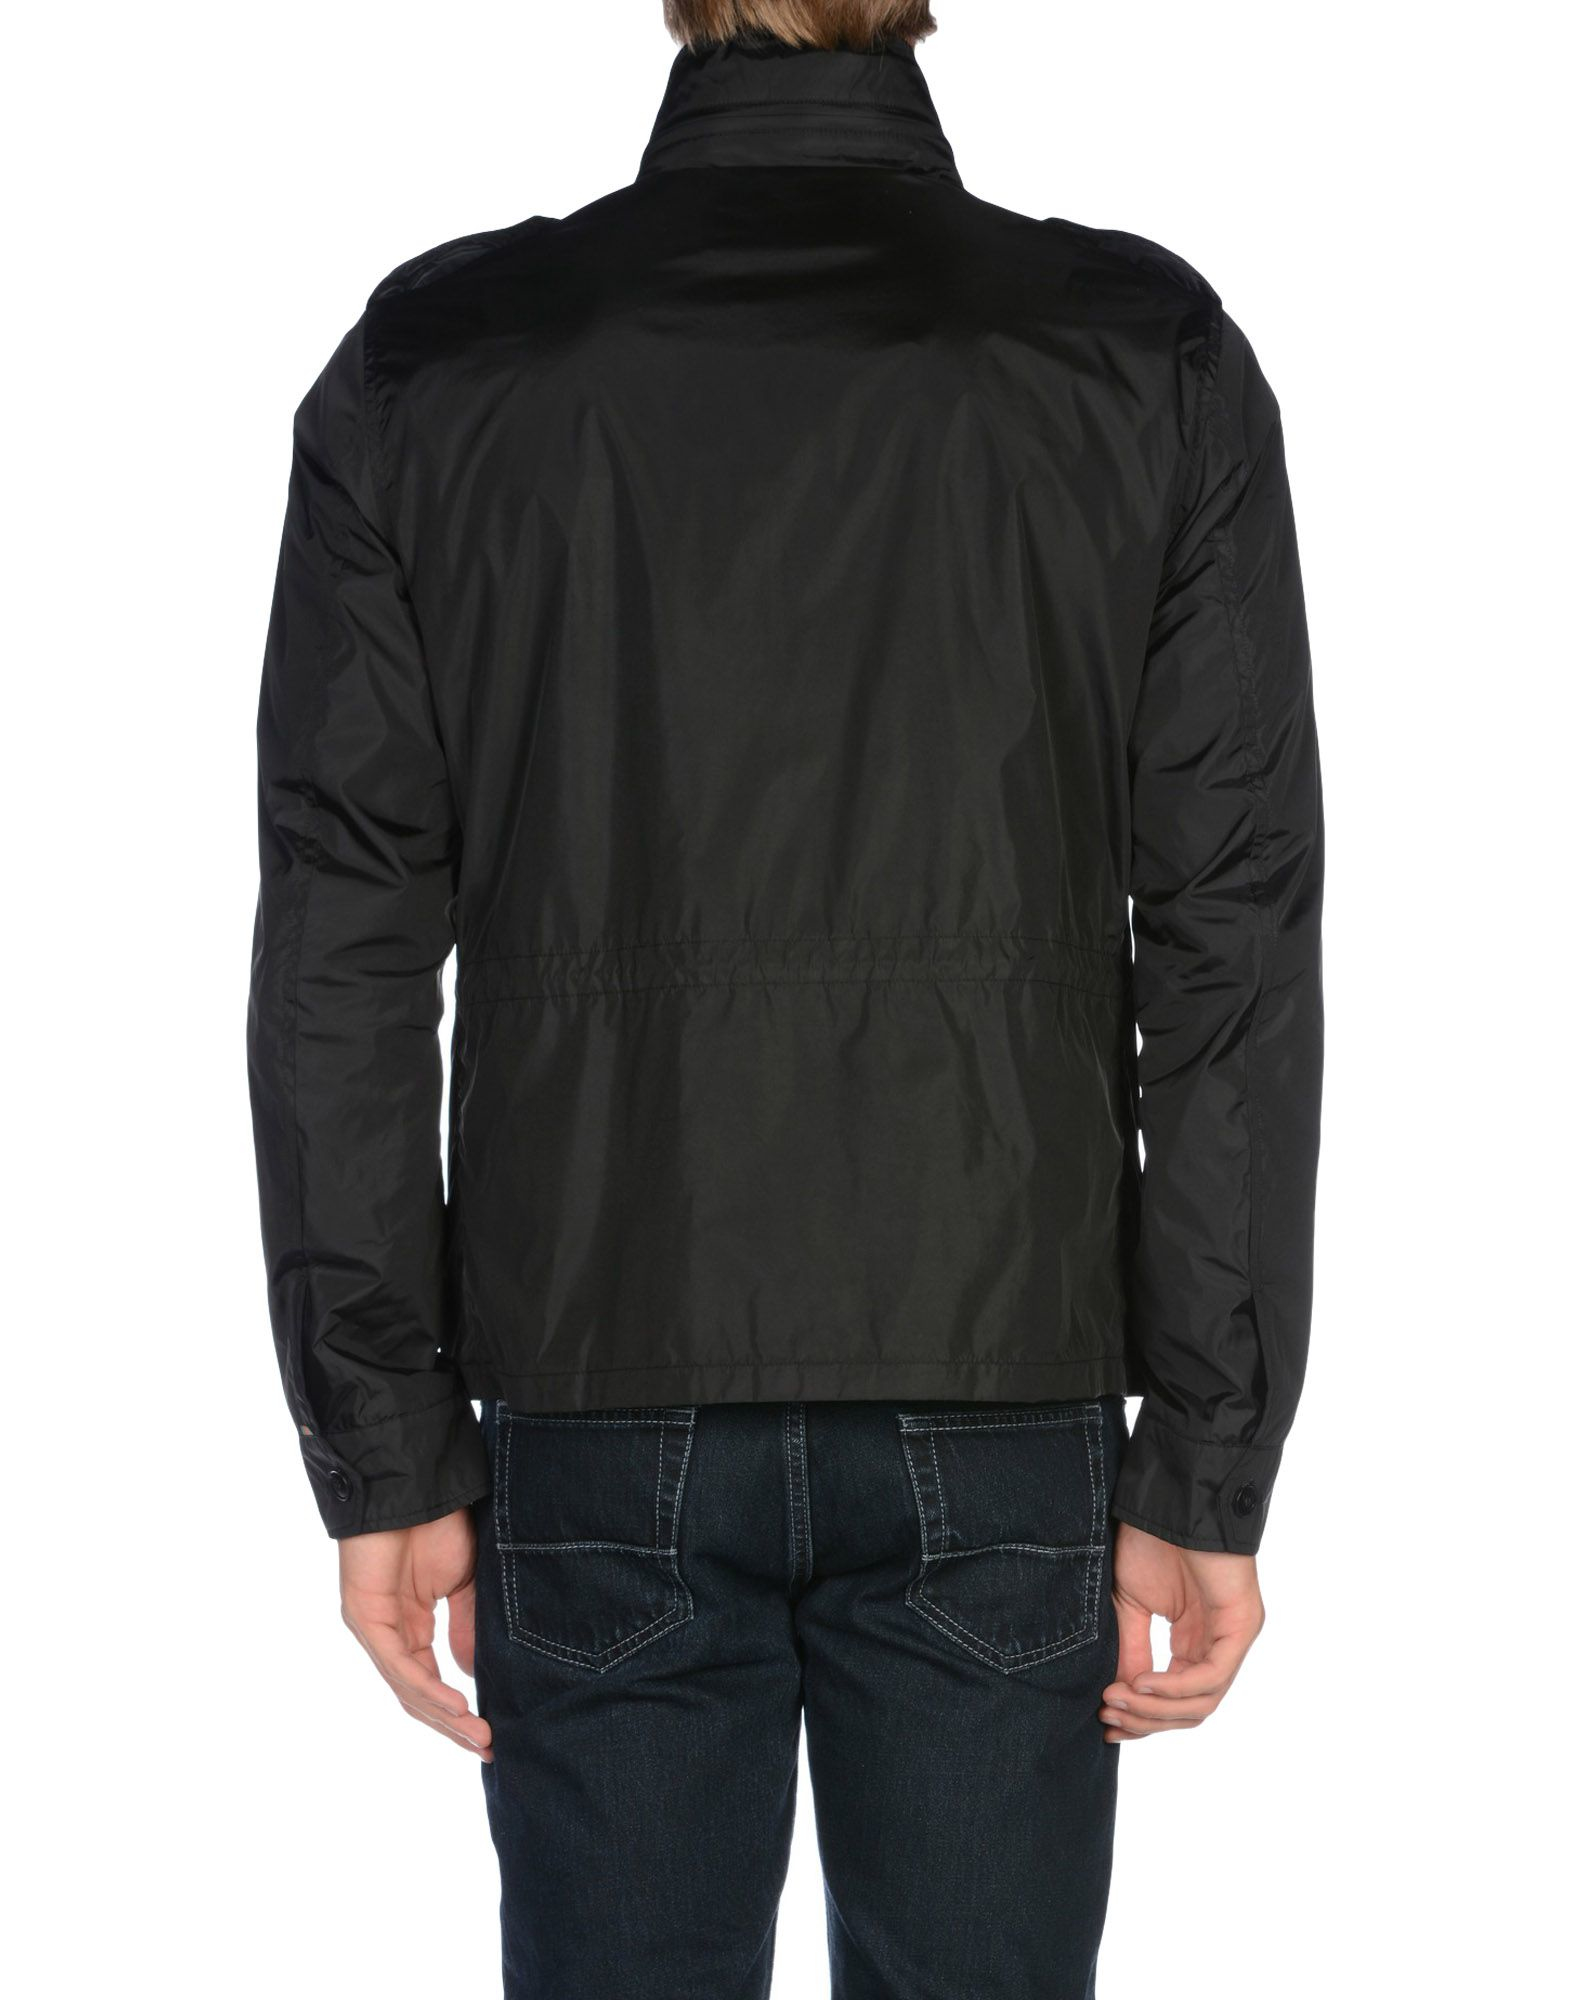 Lyst - Gucci Jacket in Black for Men